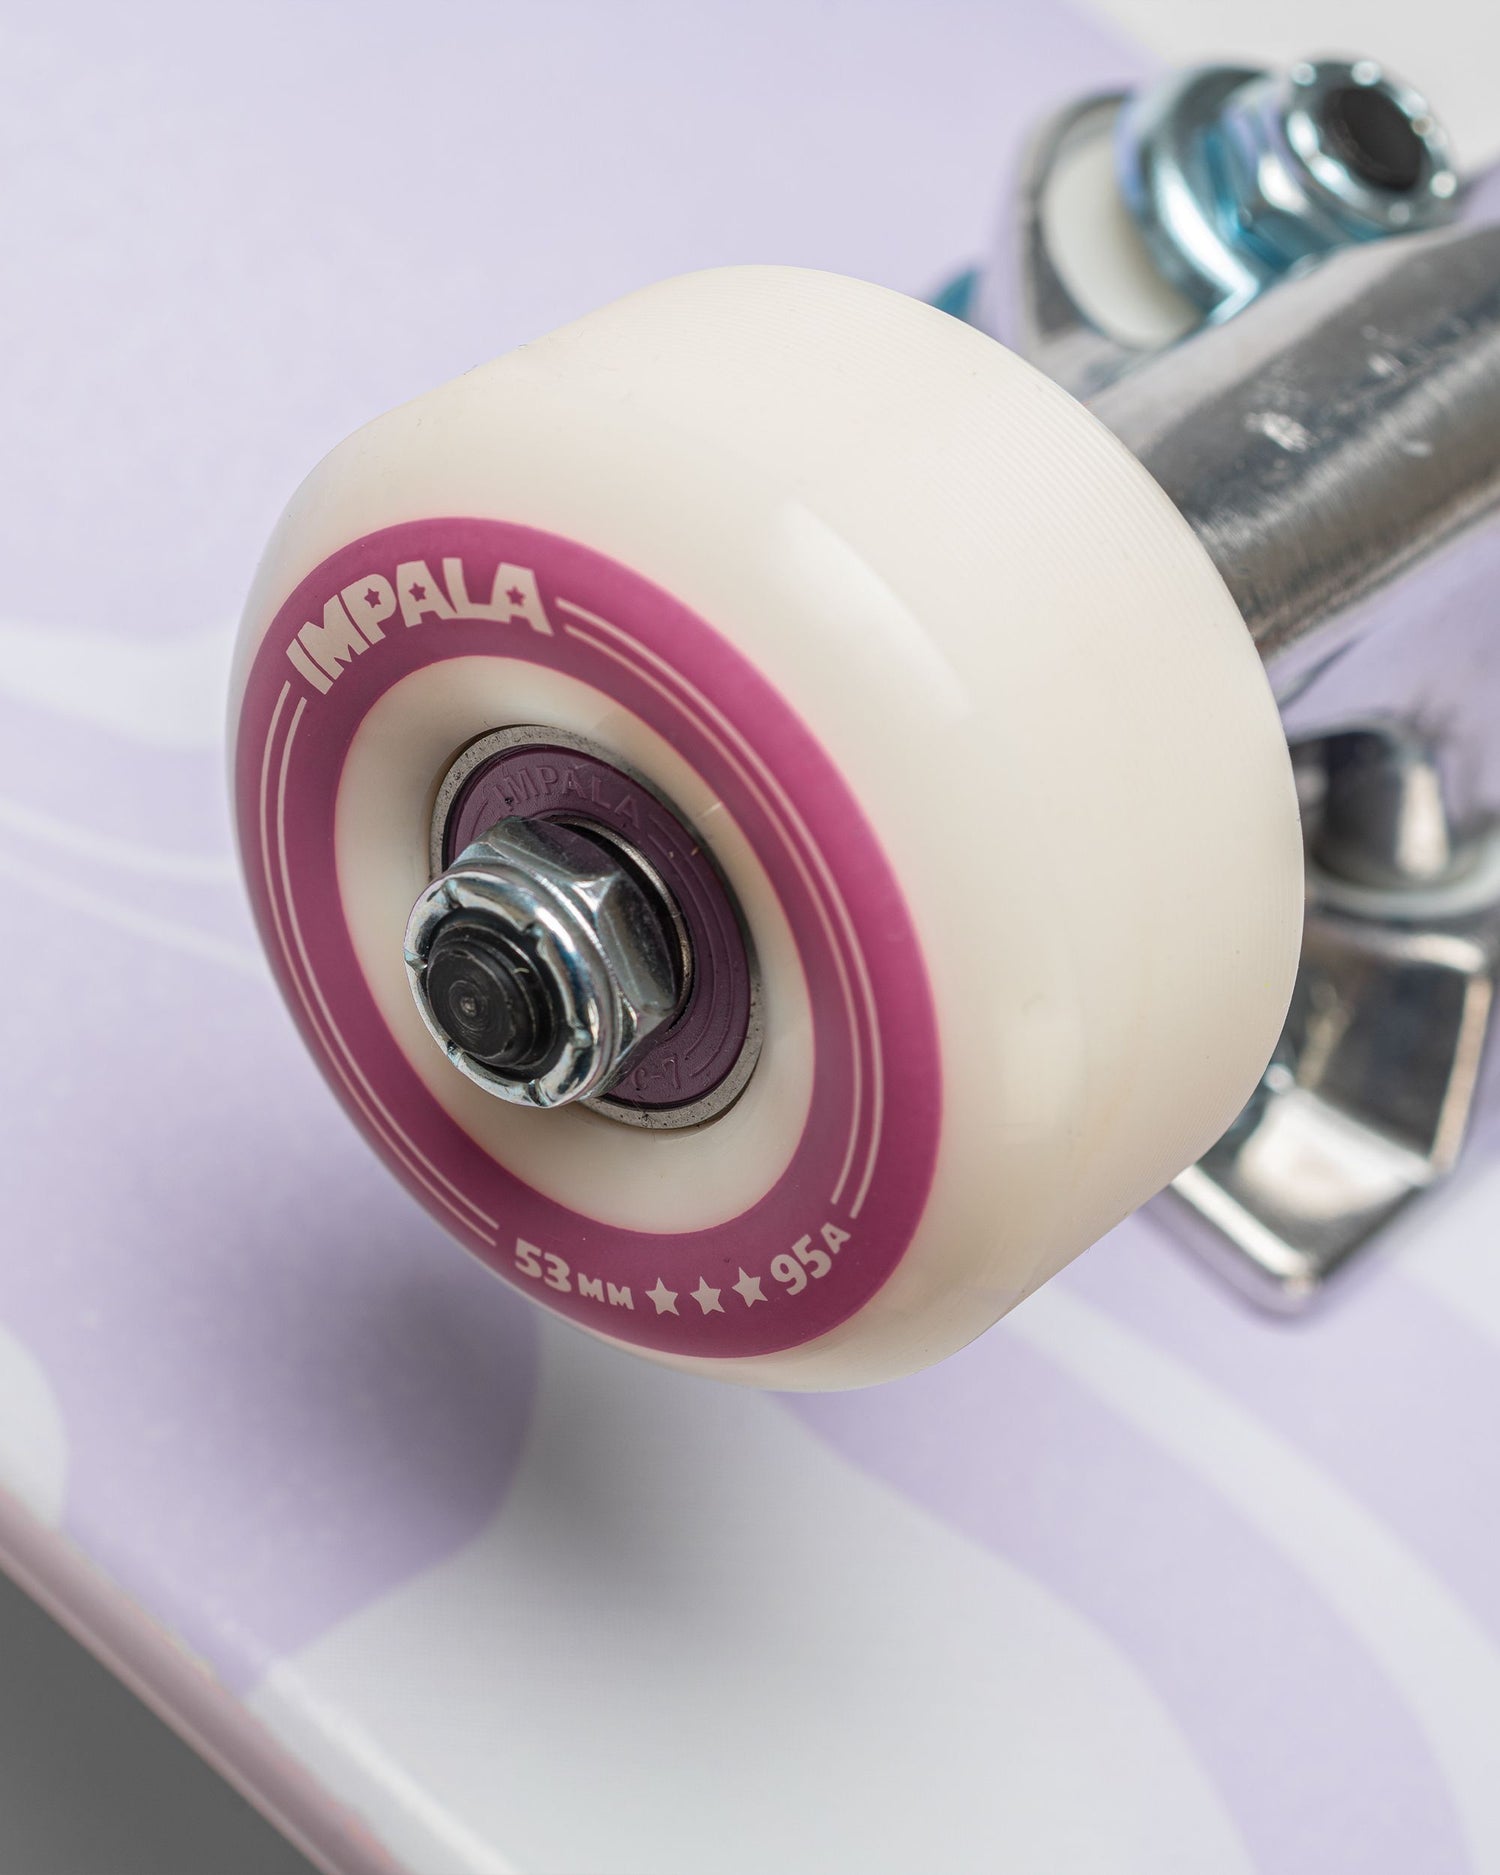 Wheels and bearings detailing of Impala Cosmos Skateboard - Purple